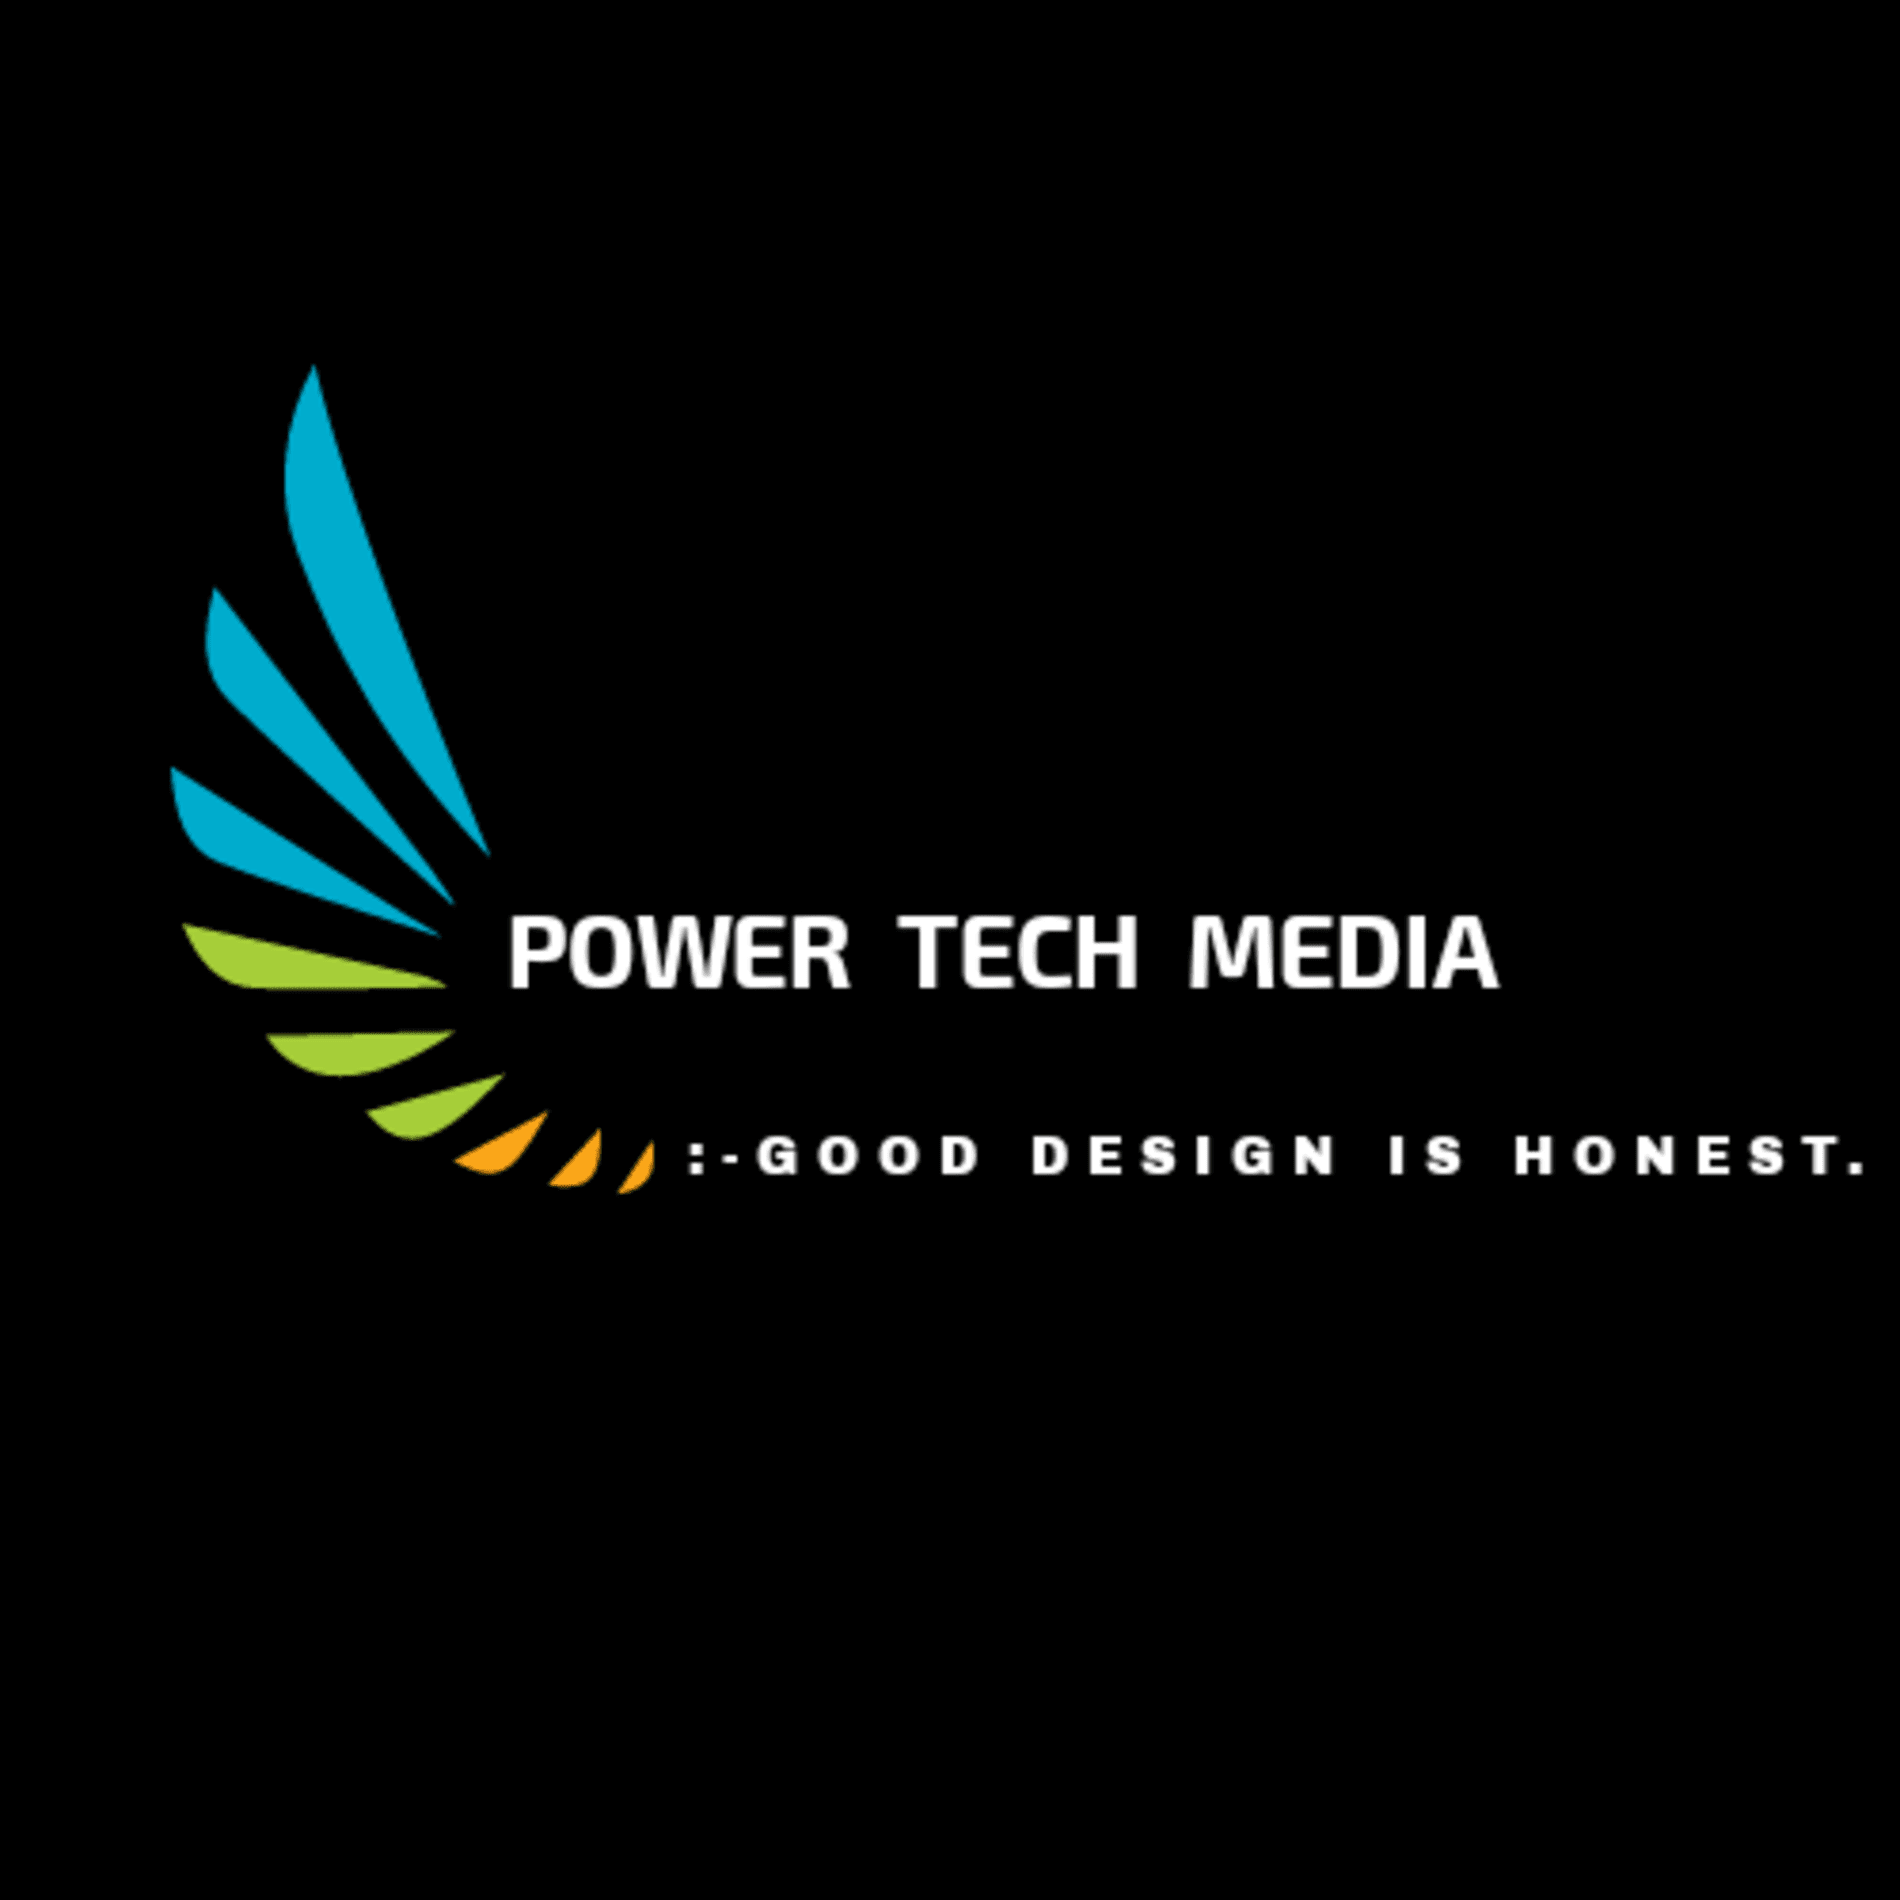 Power Tech Media